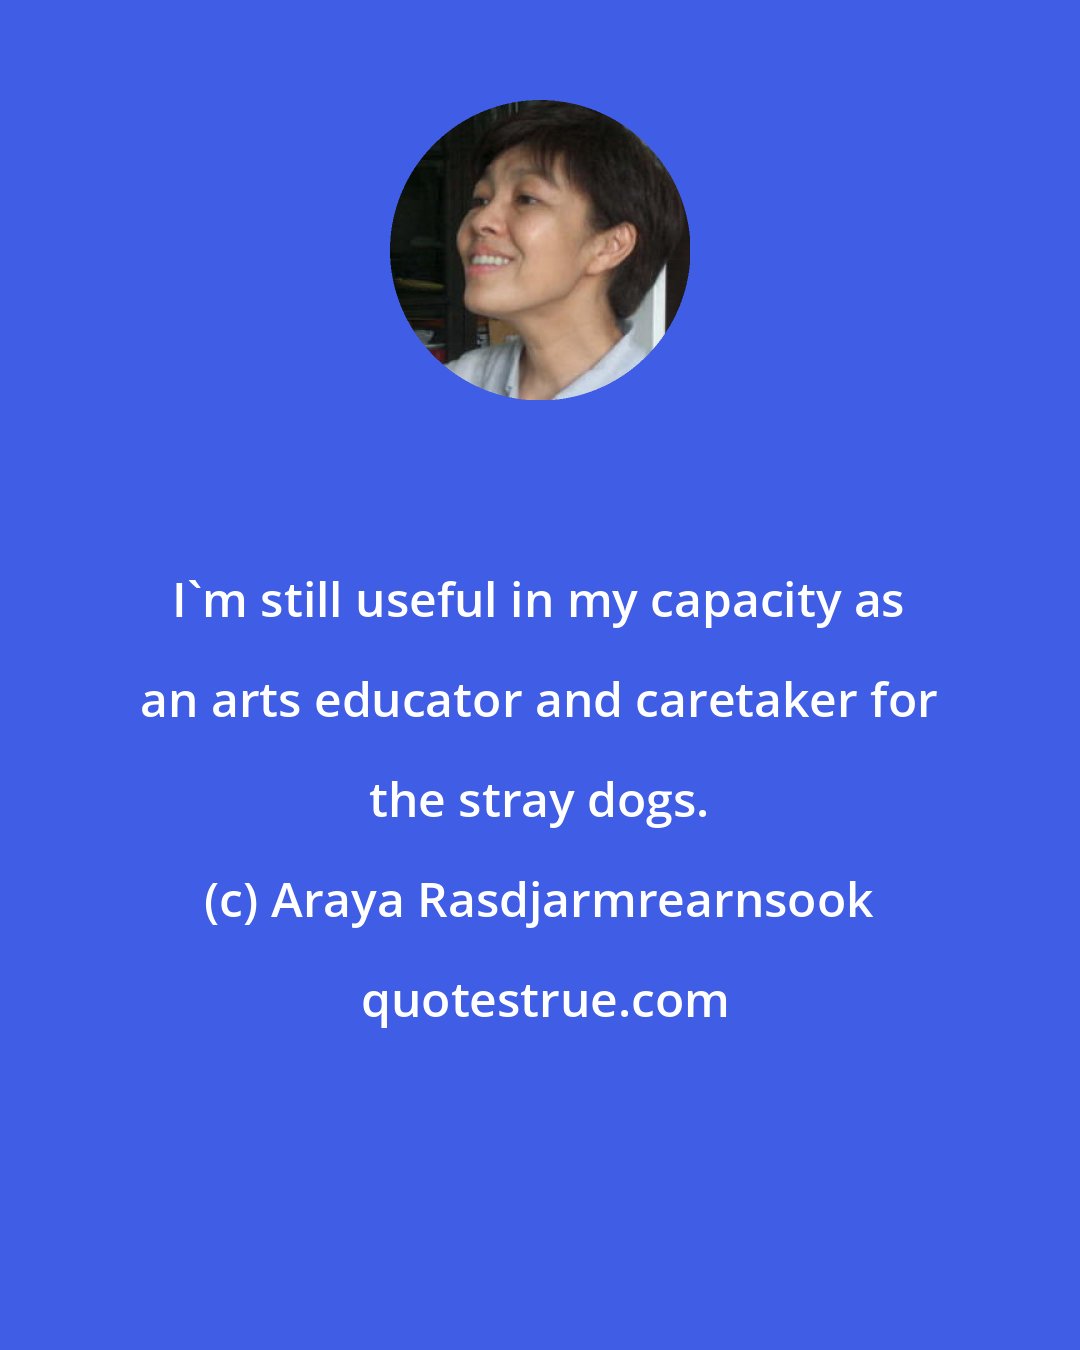 Araya Rasdjarmrearnsook: I'm still useful in my capacity as an arts educator and caretaker for the stray dogs.